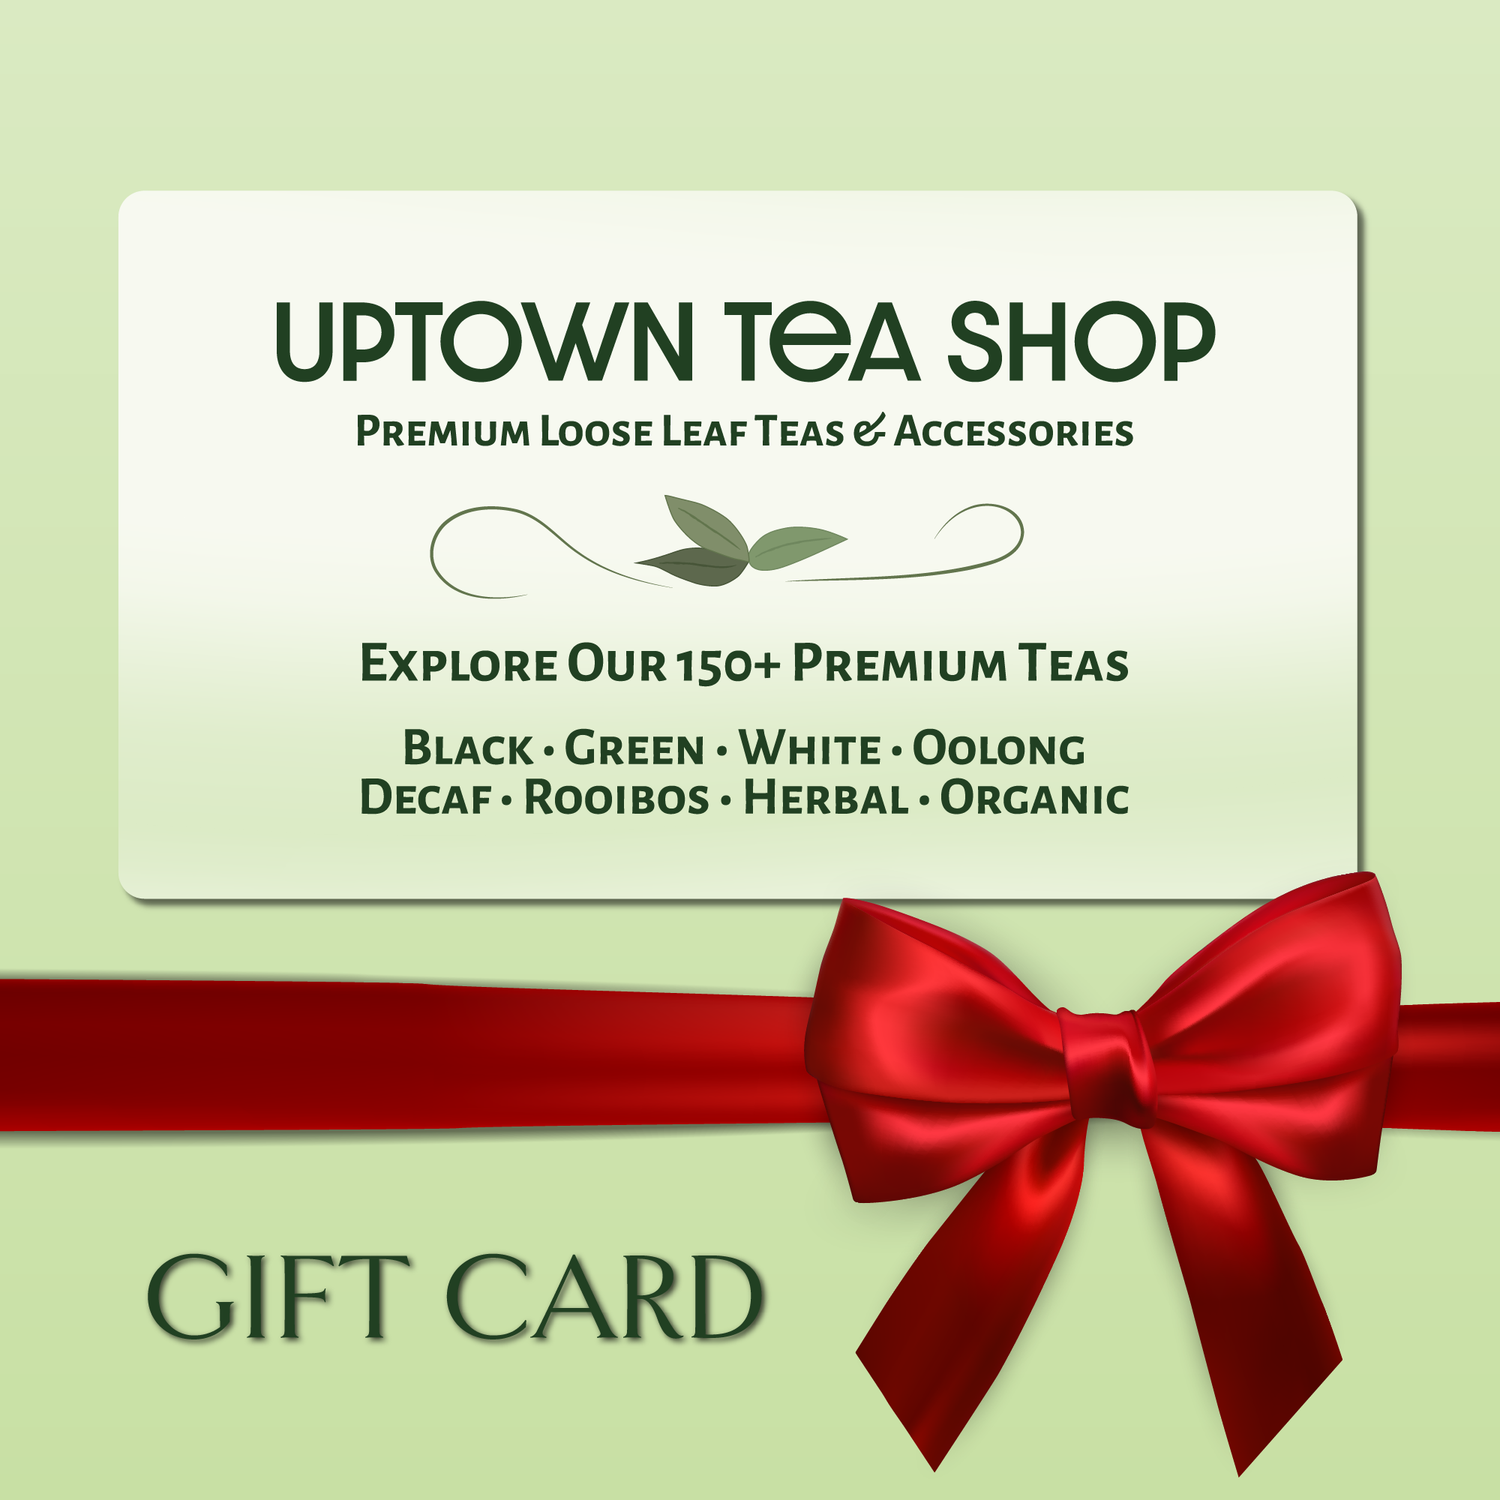 Uptown Tea Shop Gift Card - $10